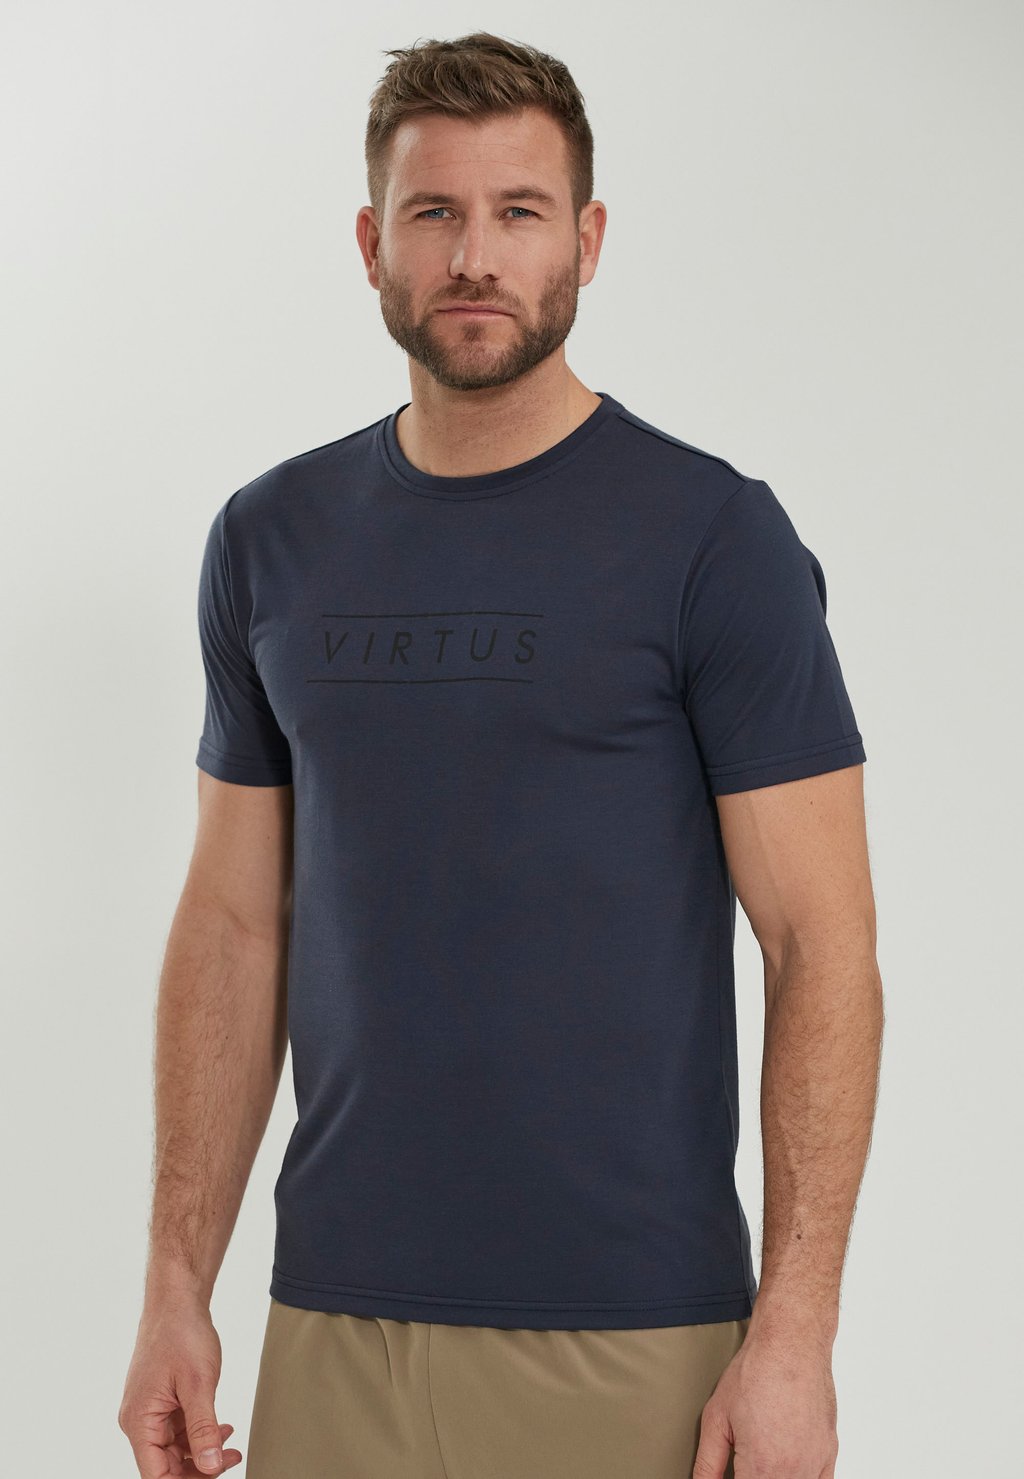 Спортивная футболка VIRTUS, цвет blue nights